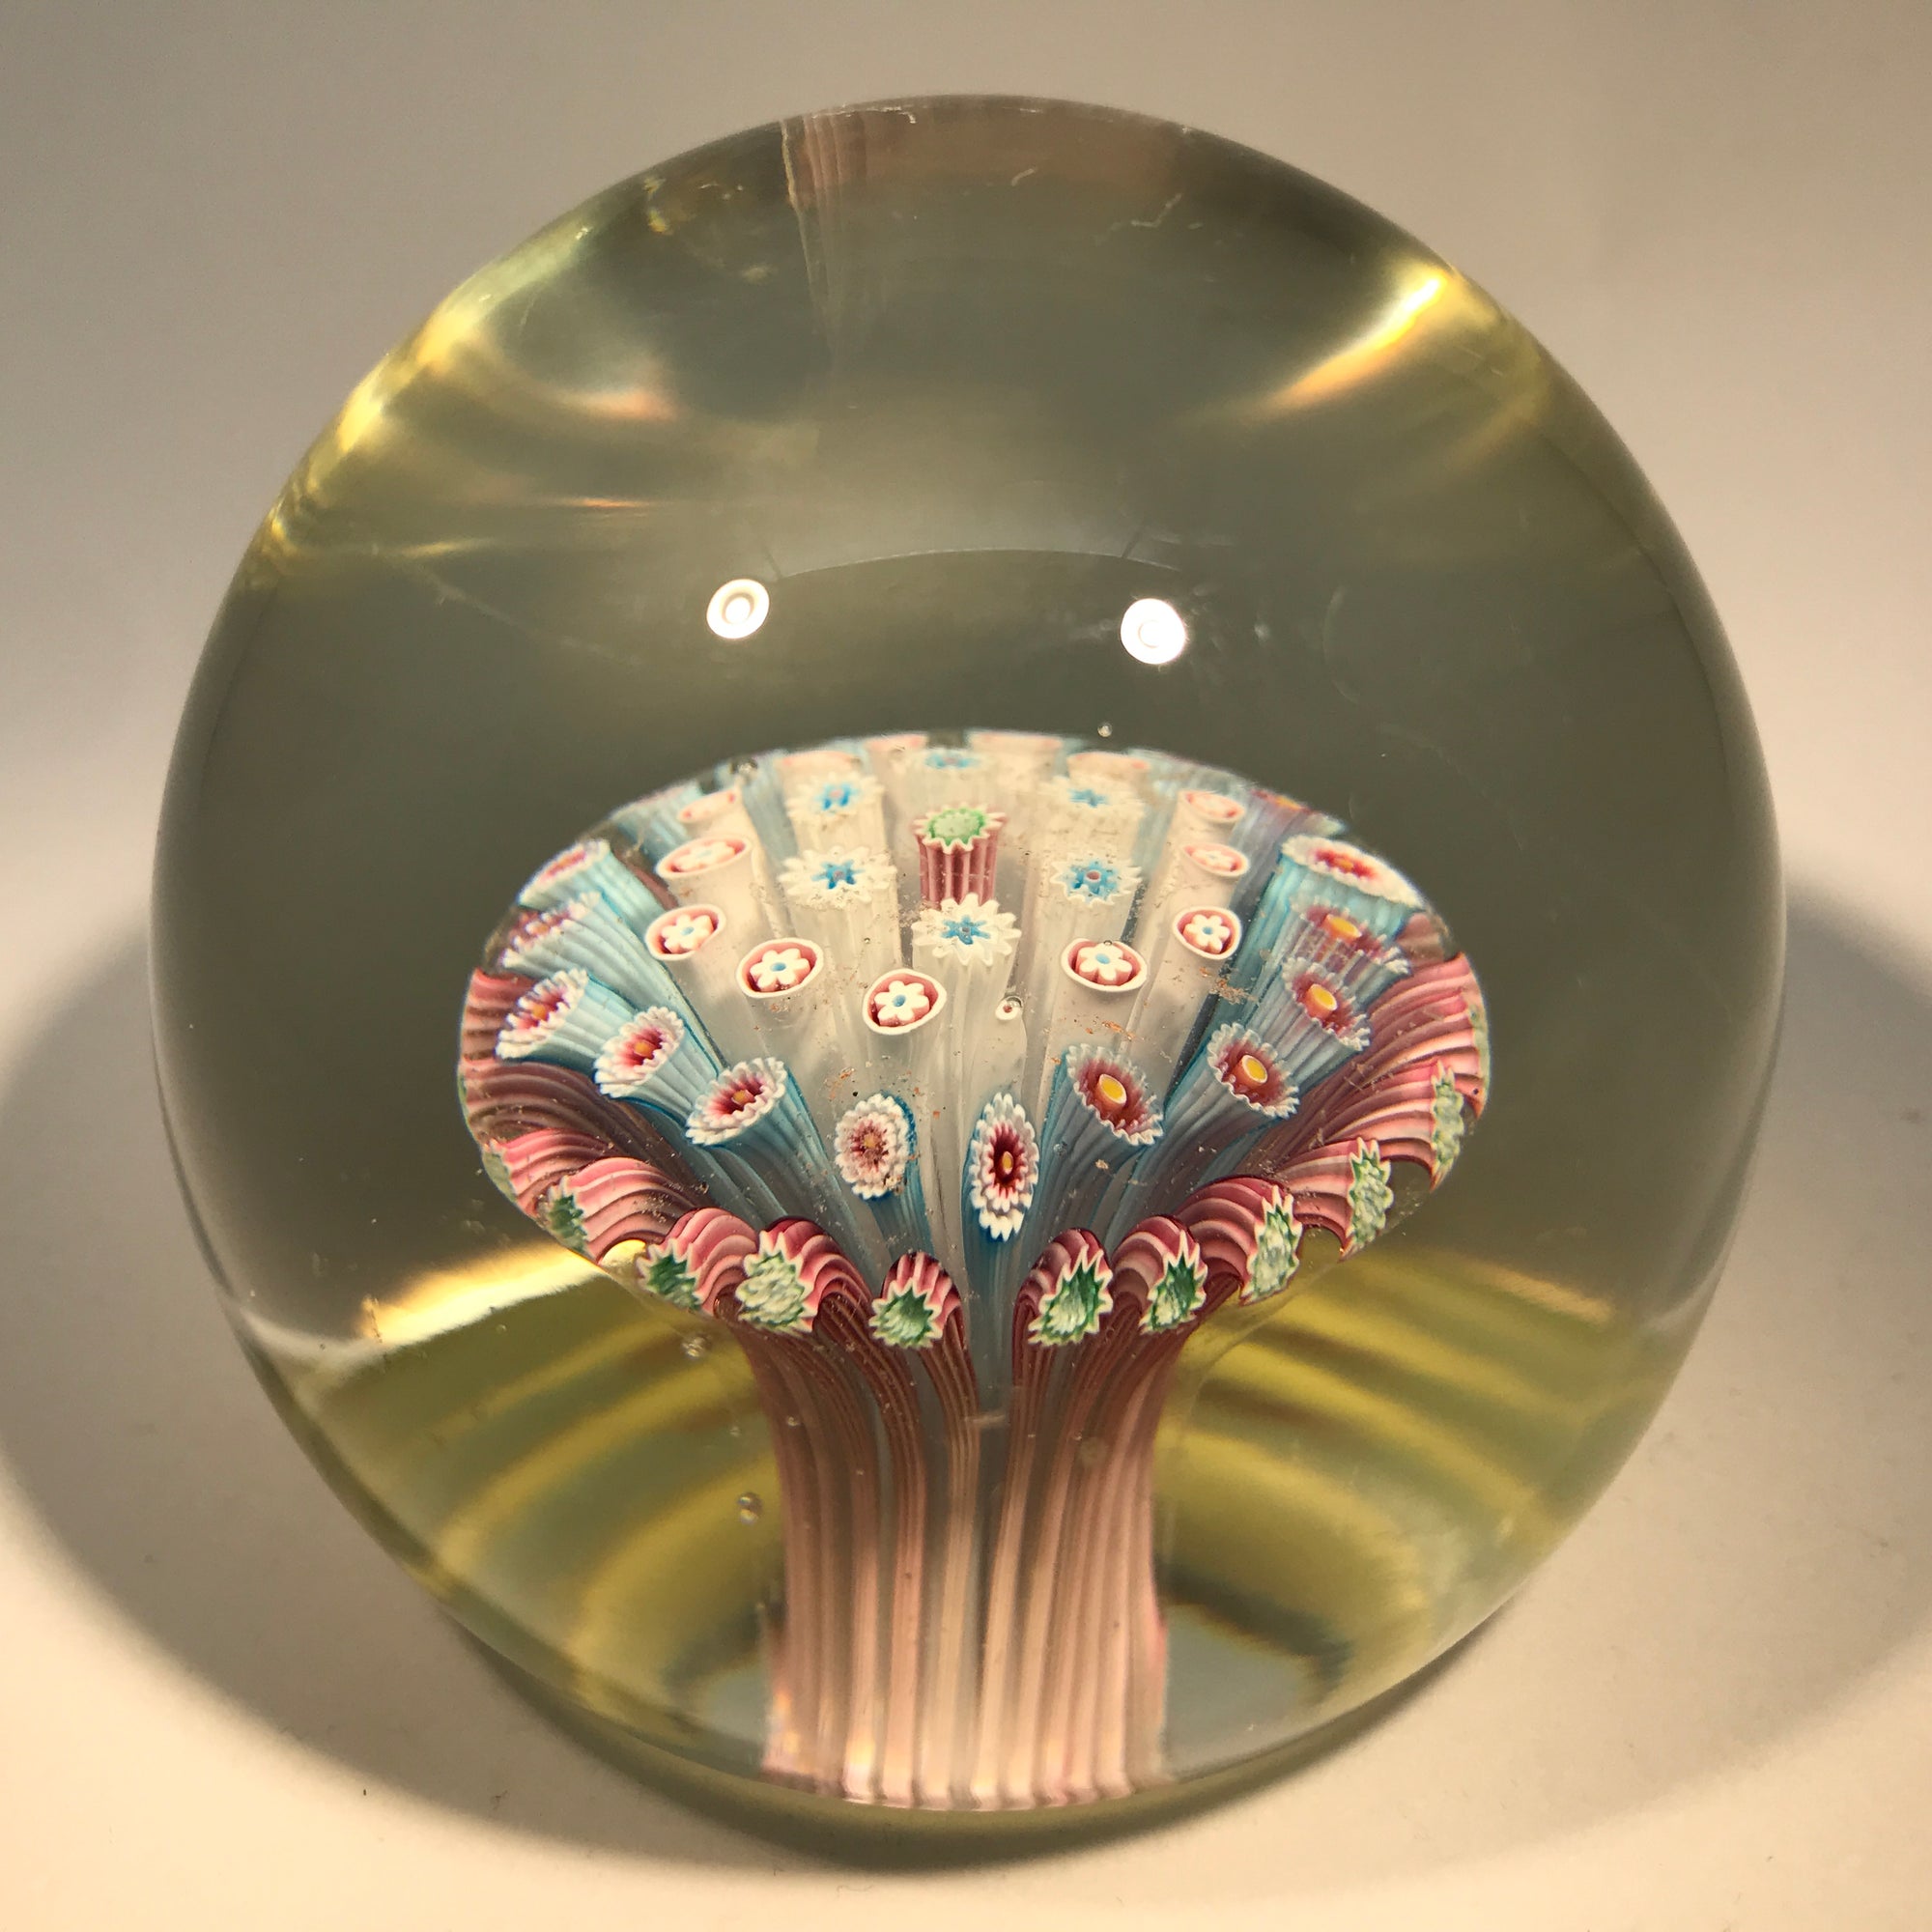 Vintage Murano Fratelli Toso Art Glass Paperweight Millefiori Mushroom